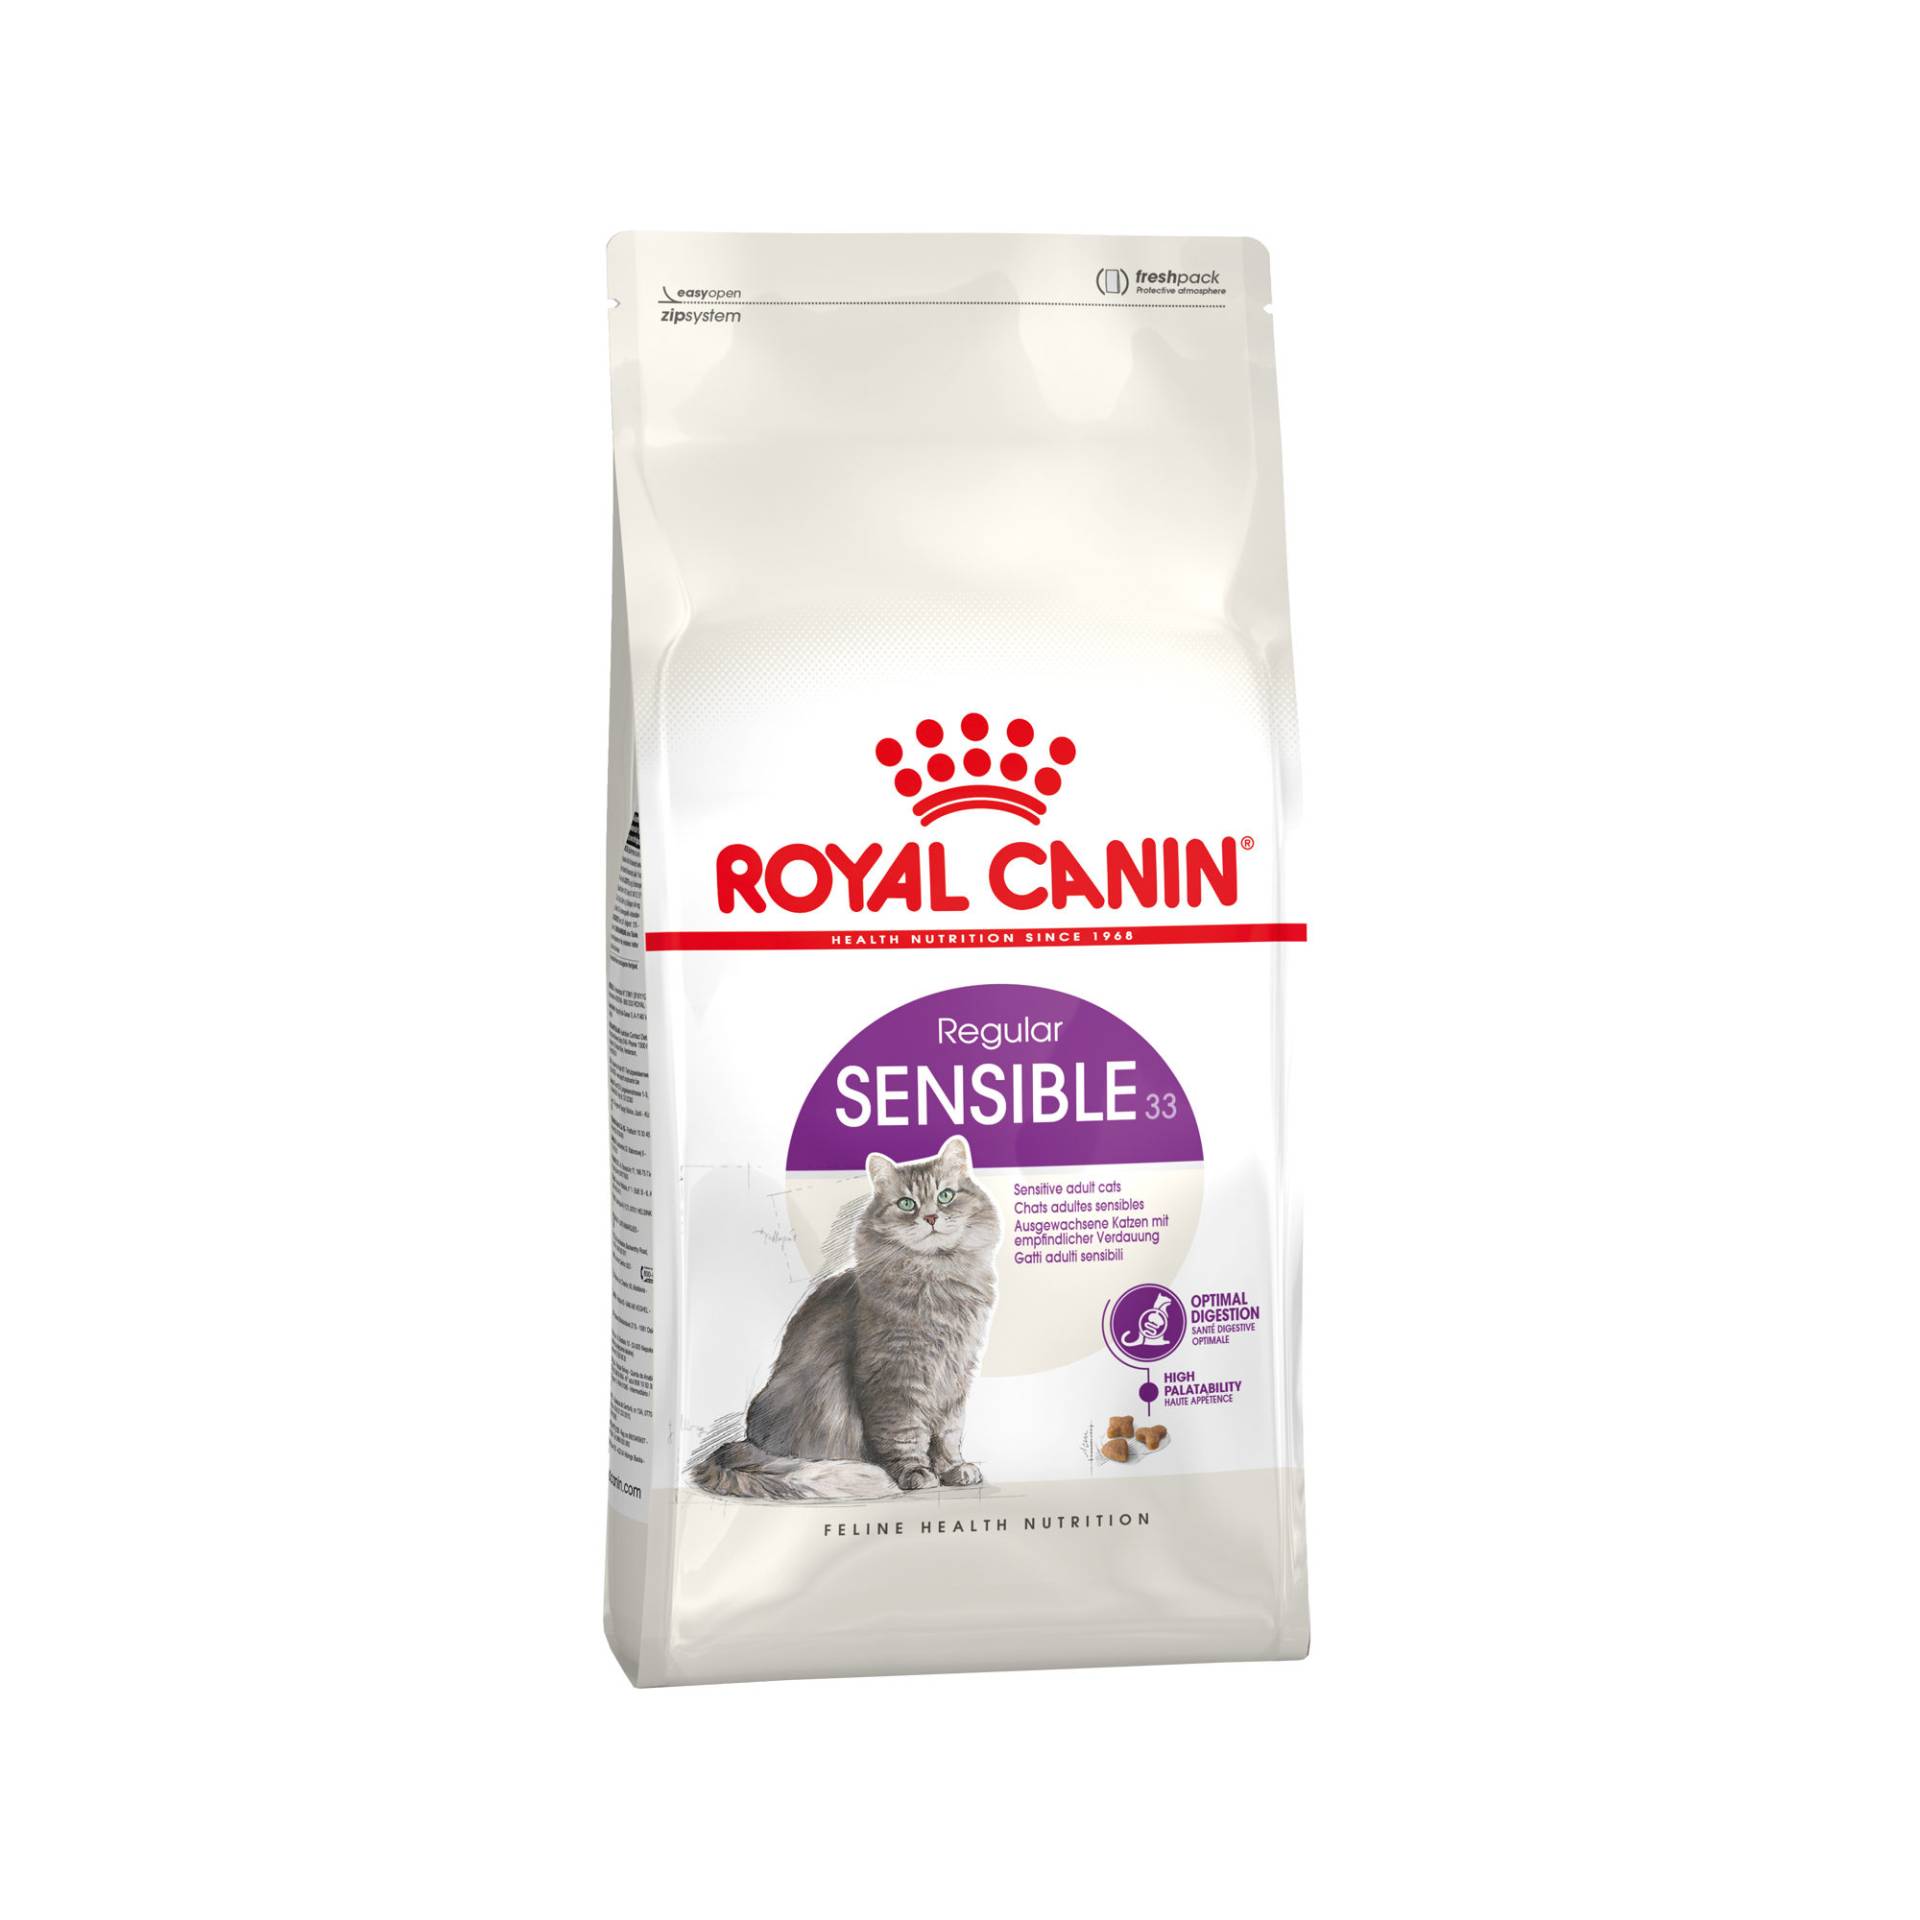 Royal Canin Sensible 33 Katzenfutter - 10 kg von Royal Canin